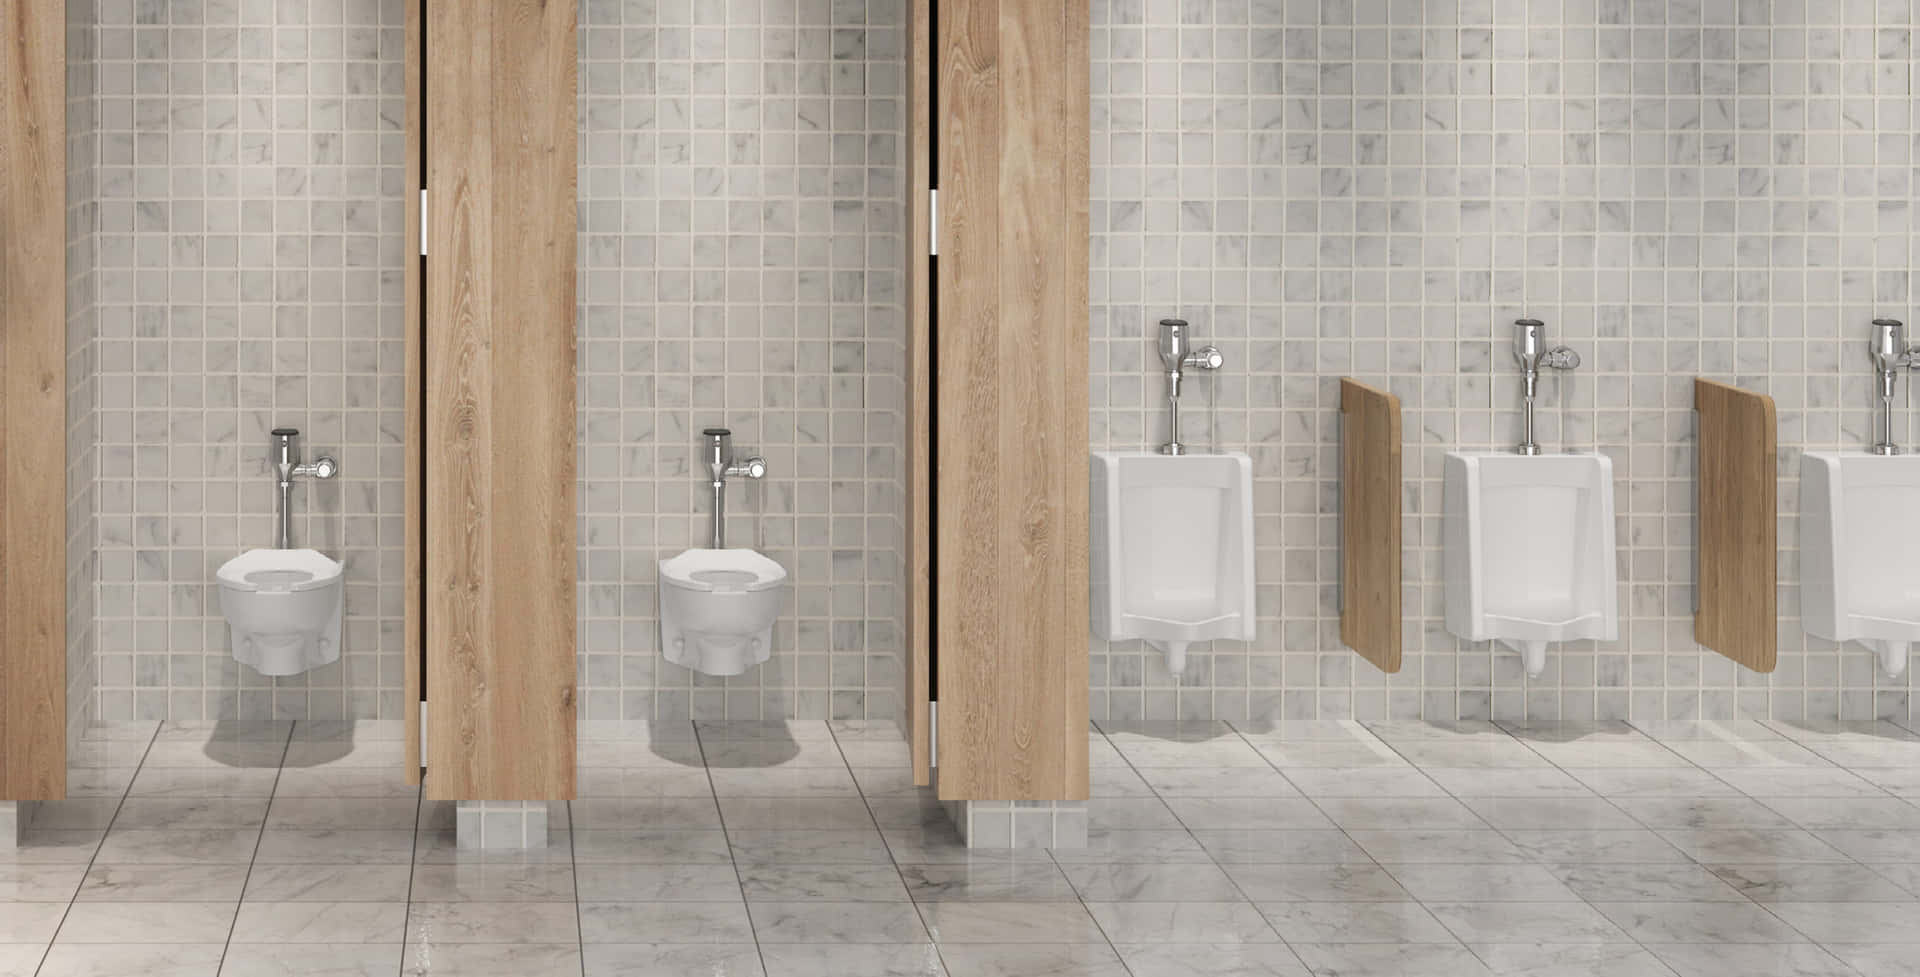 A Row Of Urinals In A Bathroom